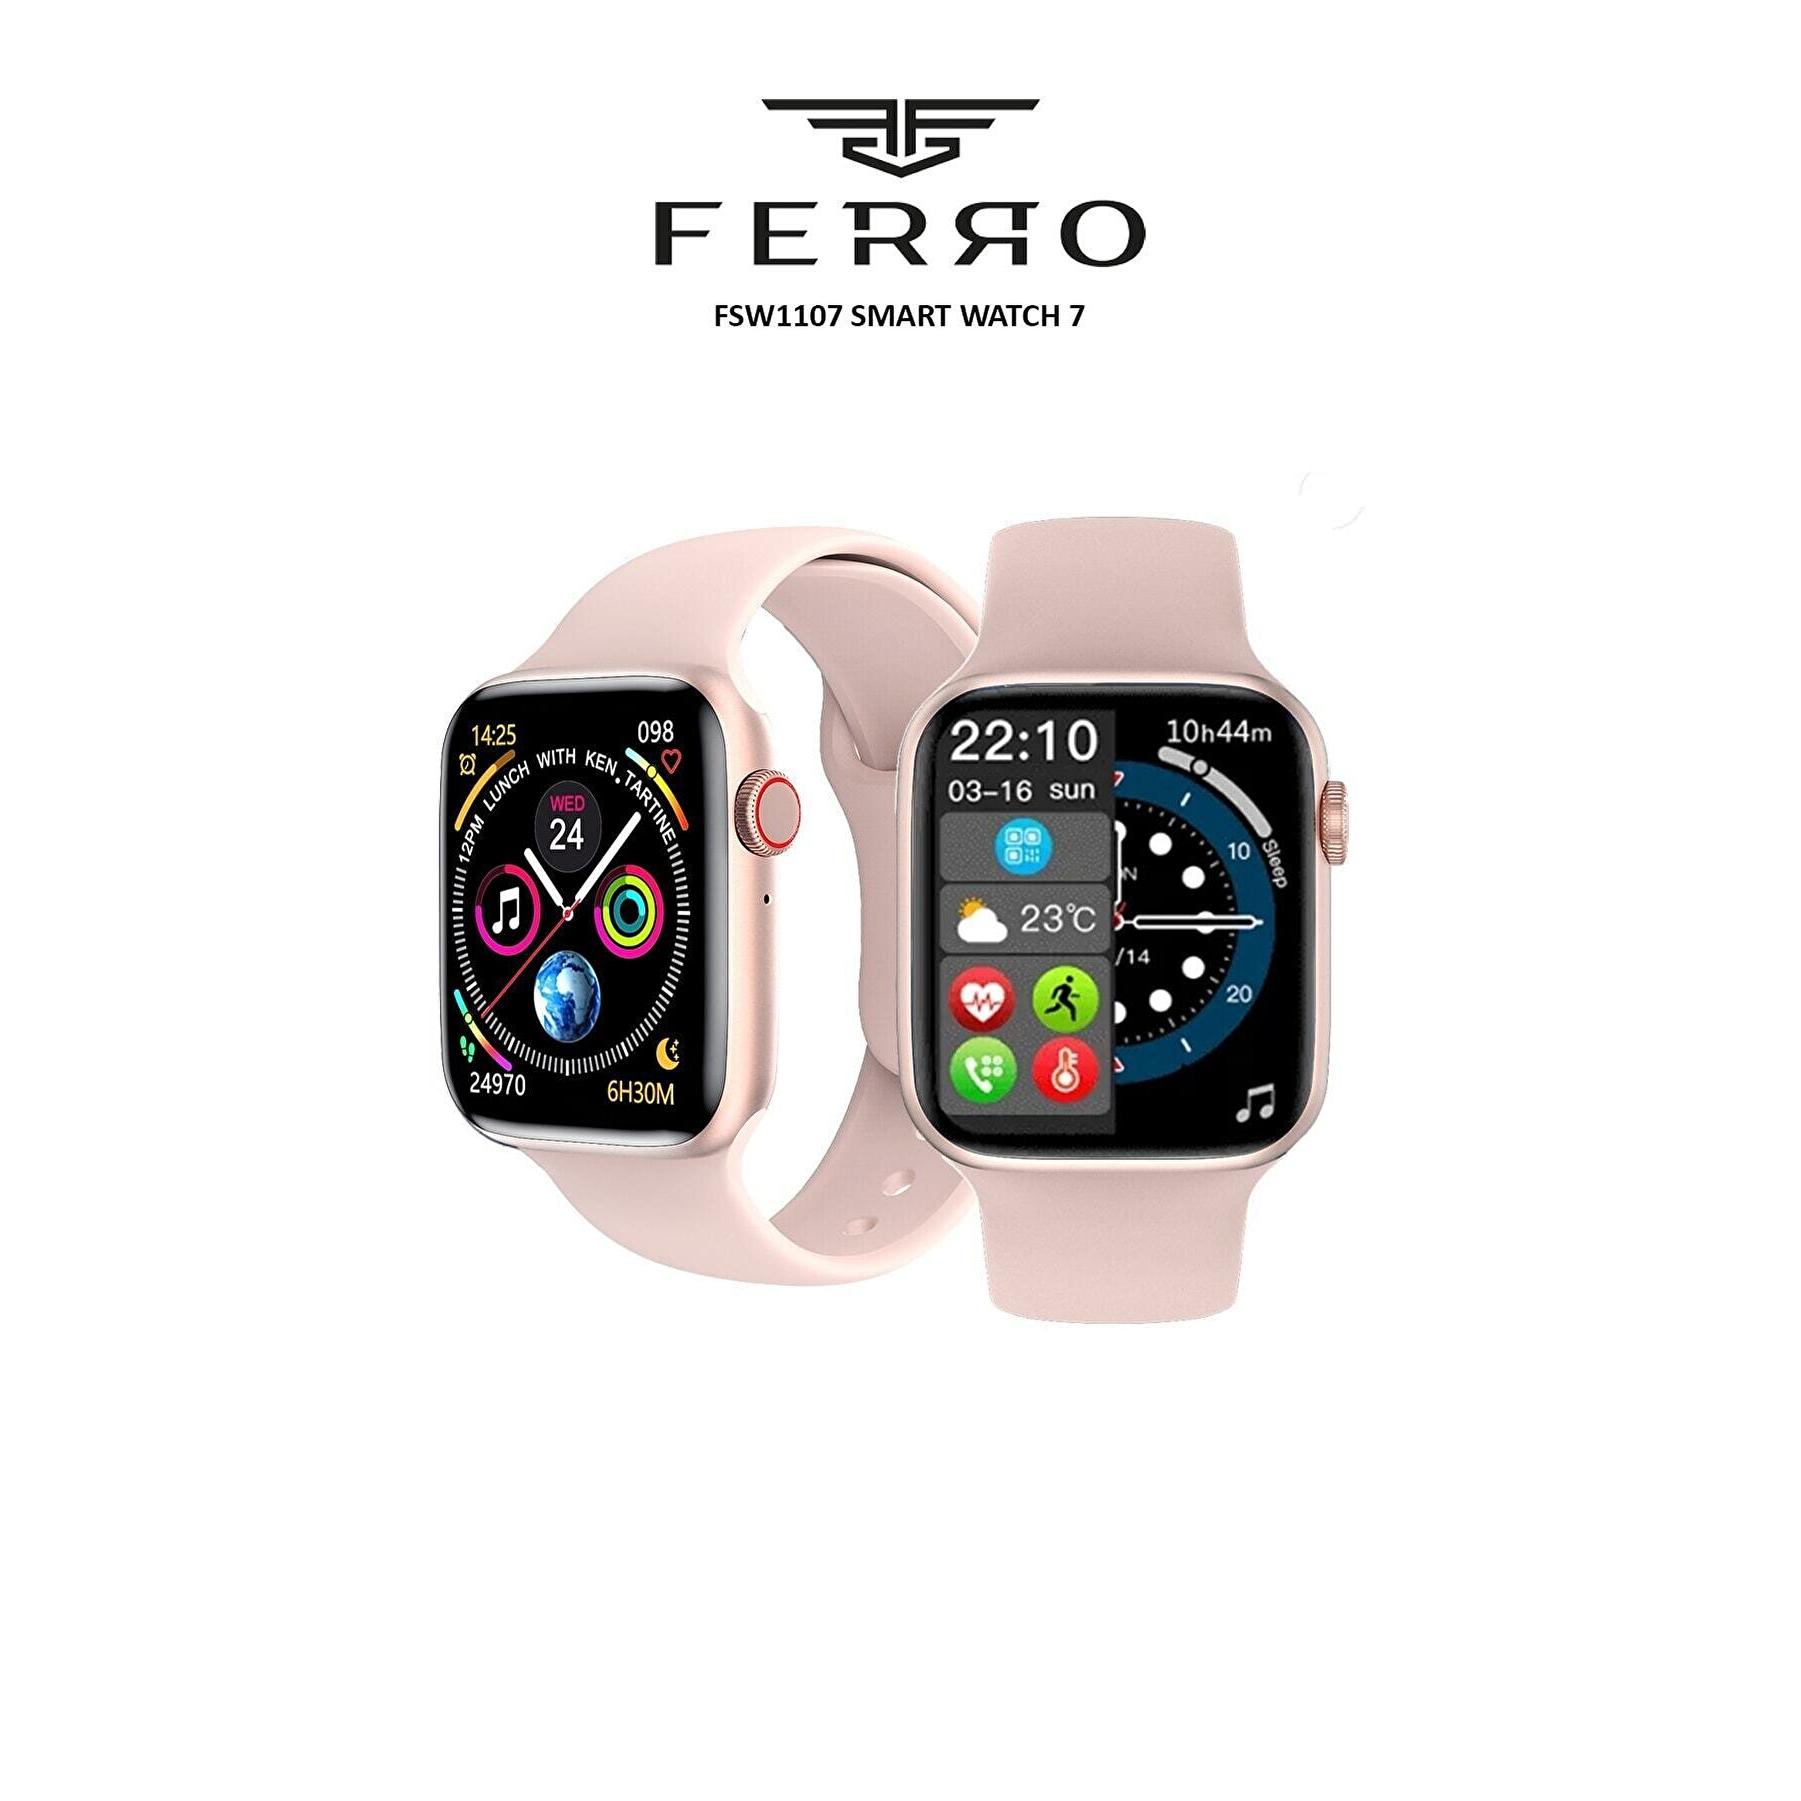 FERRO Watch 7 Android Ve Ios Uyumlu Akıllı Saat FSW1104